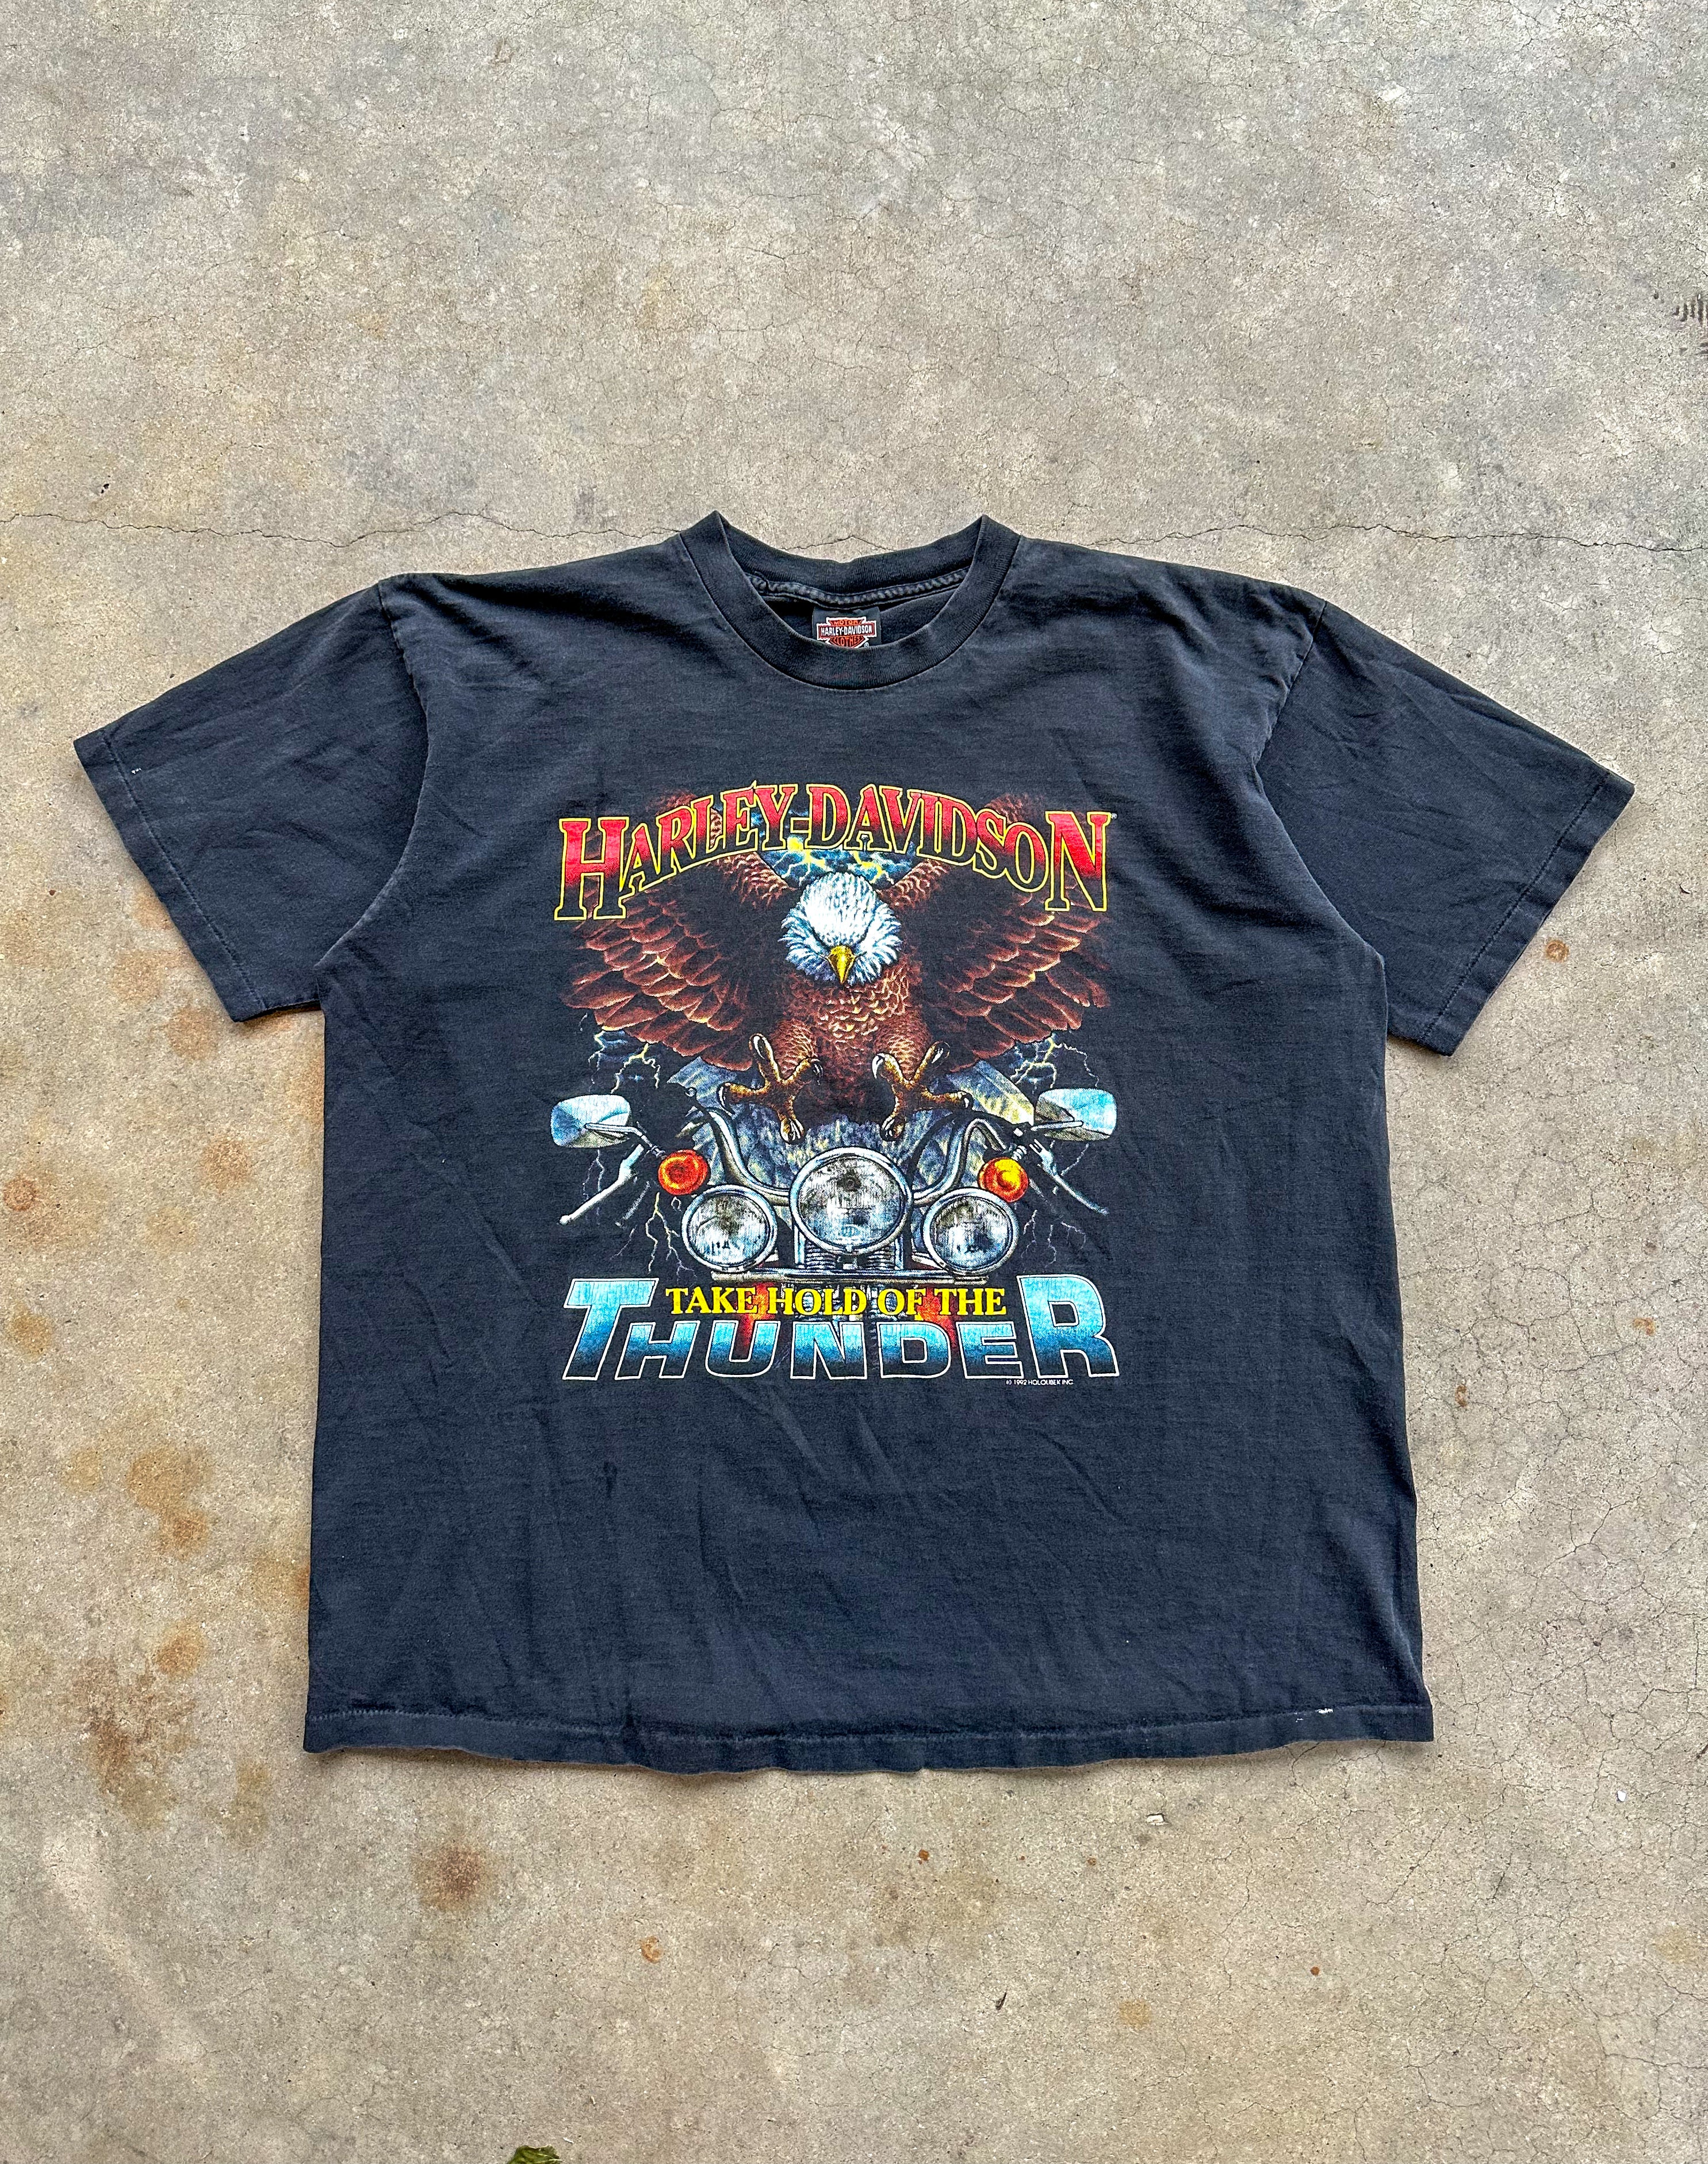 1990s Harley Davidson Take Hold of the Thunder T-Shirt (XL)